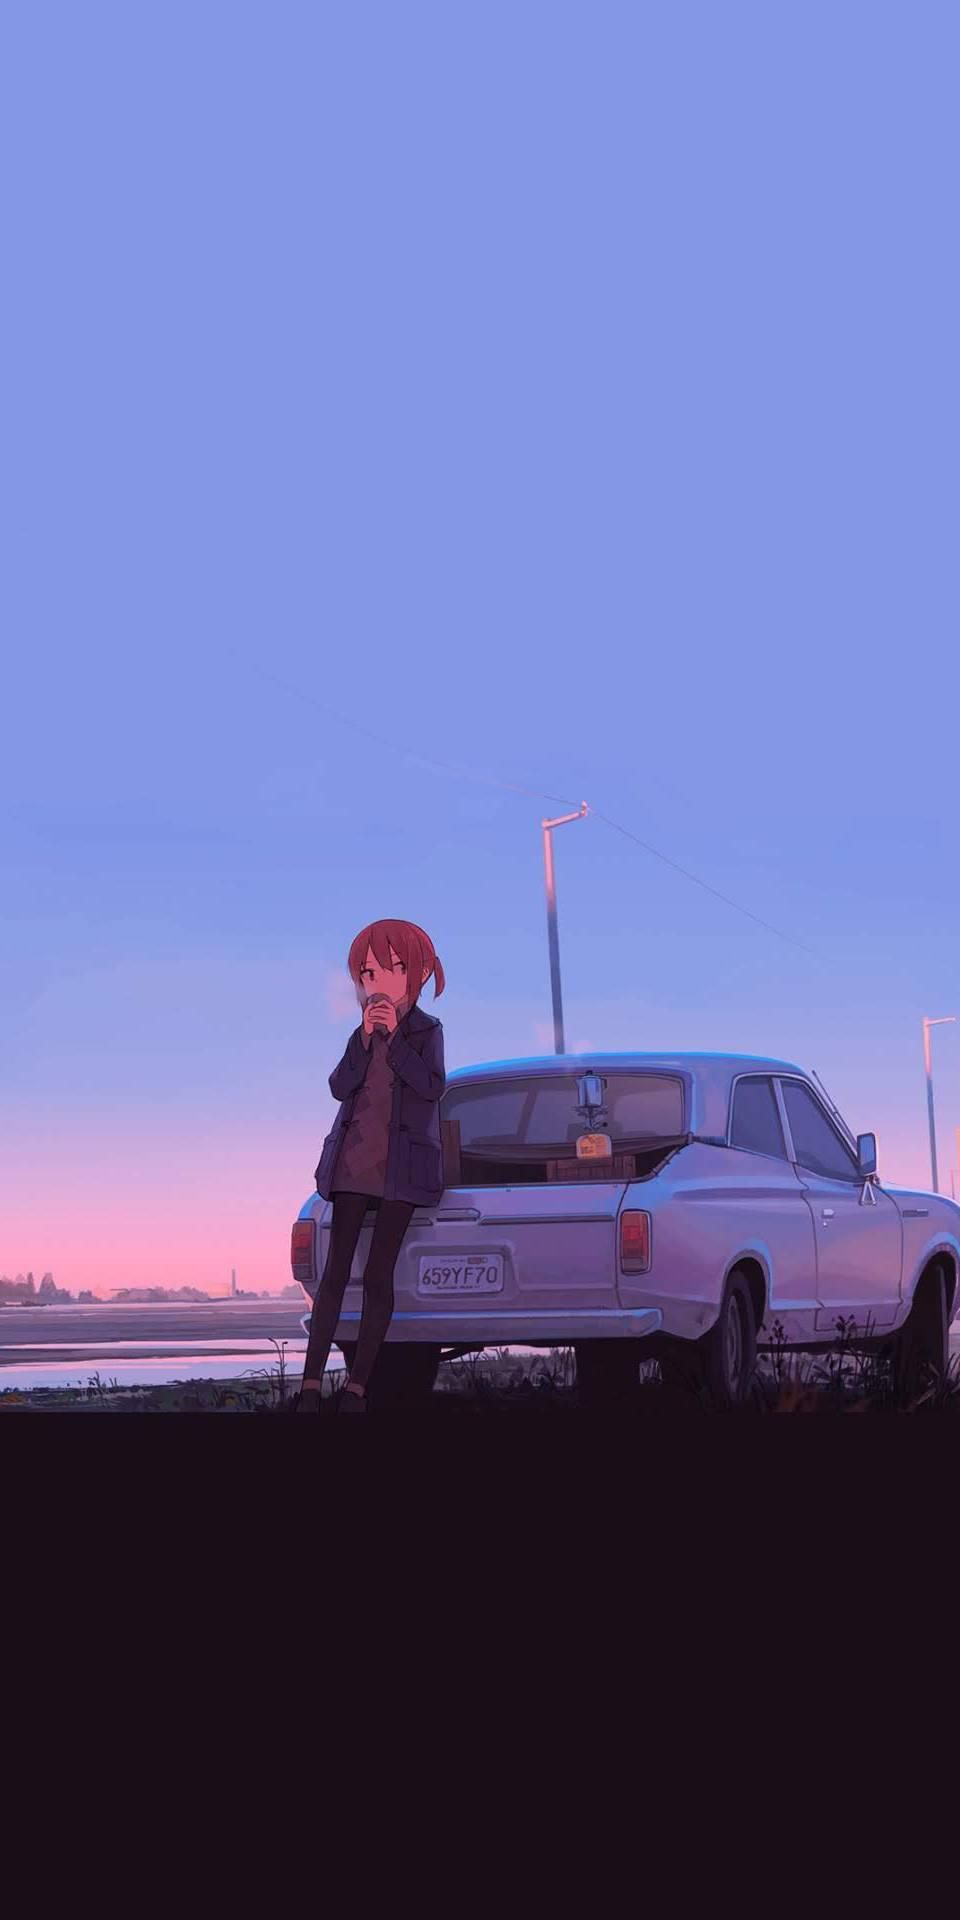 Anime Car Wallpapers